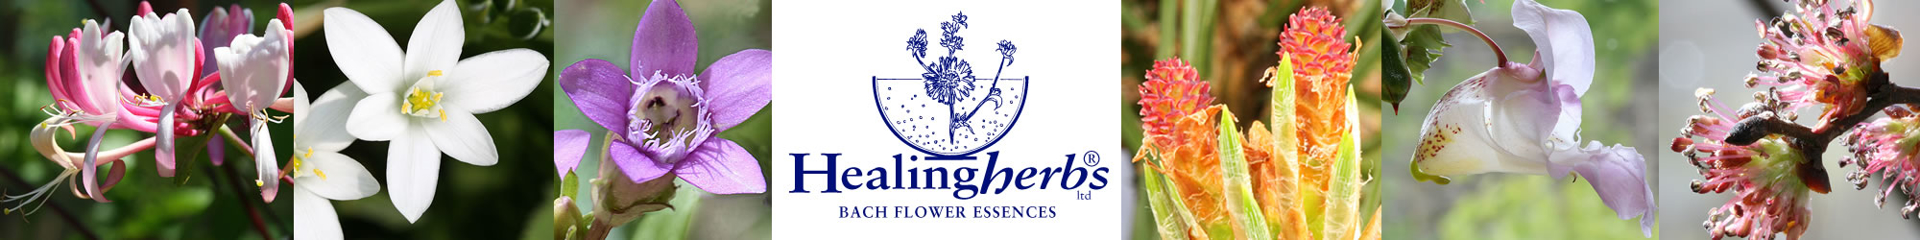 Bach Flower Remedies banner